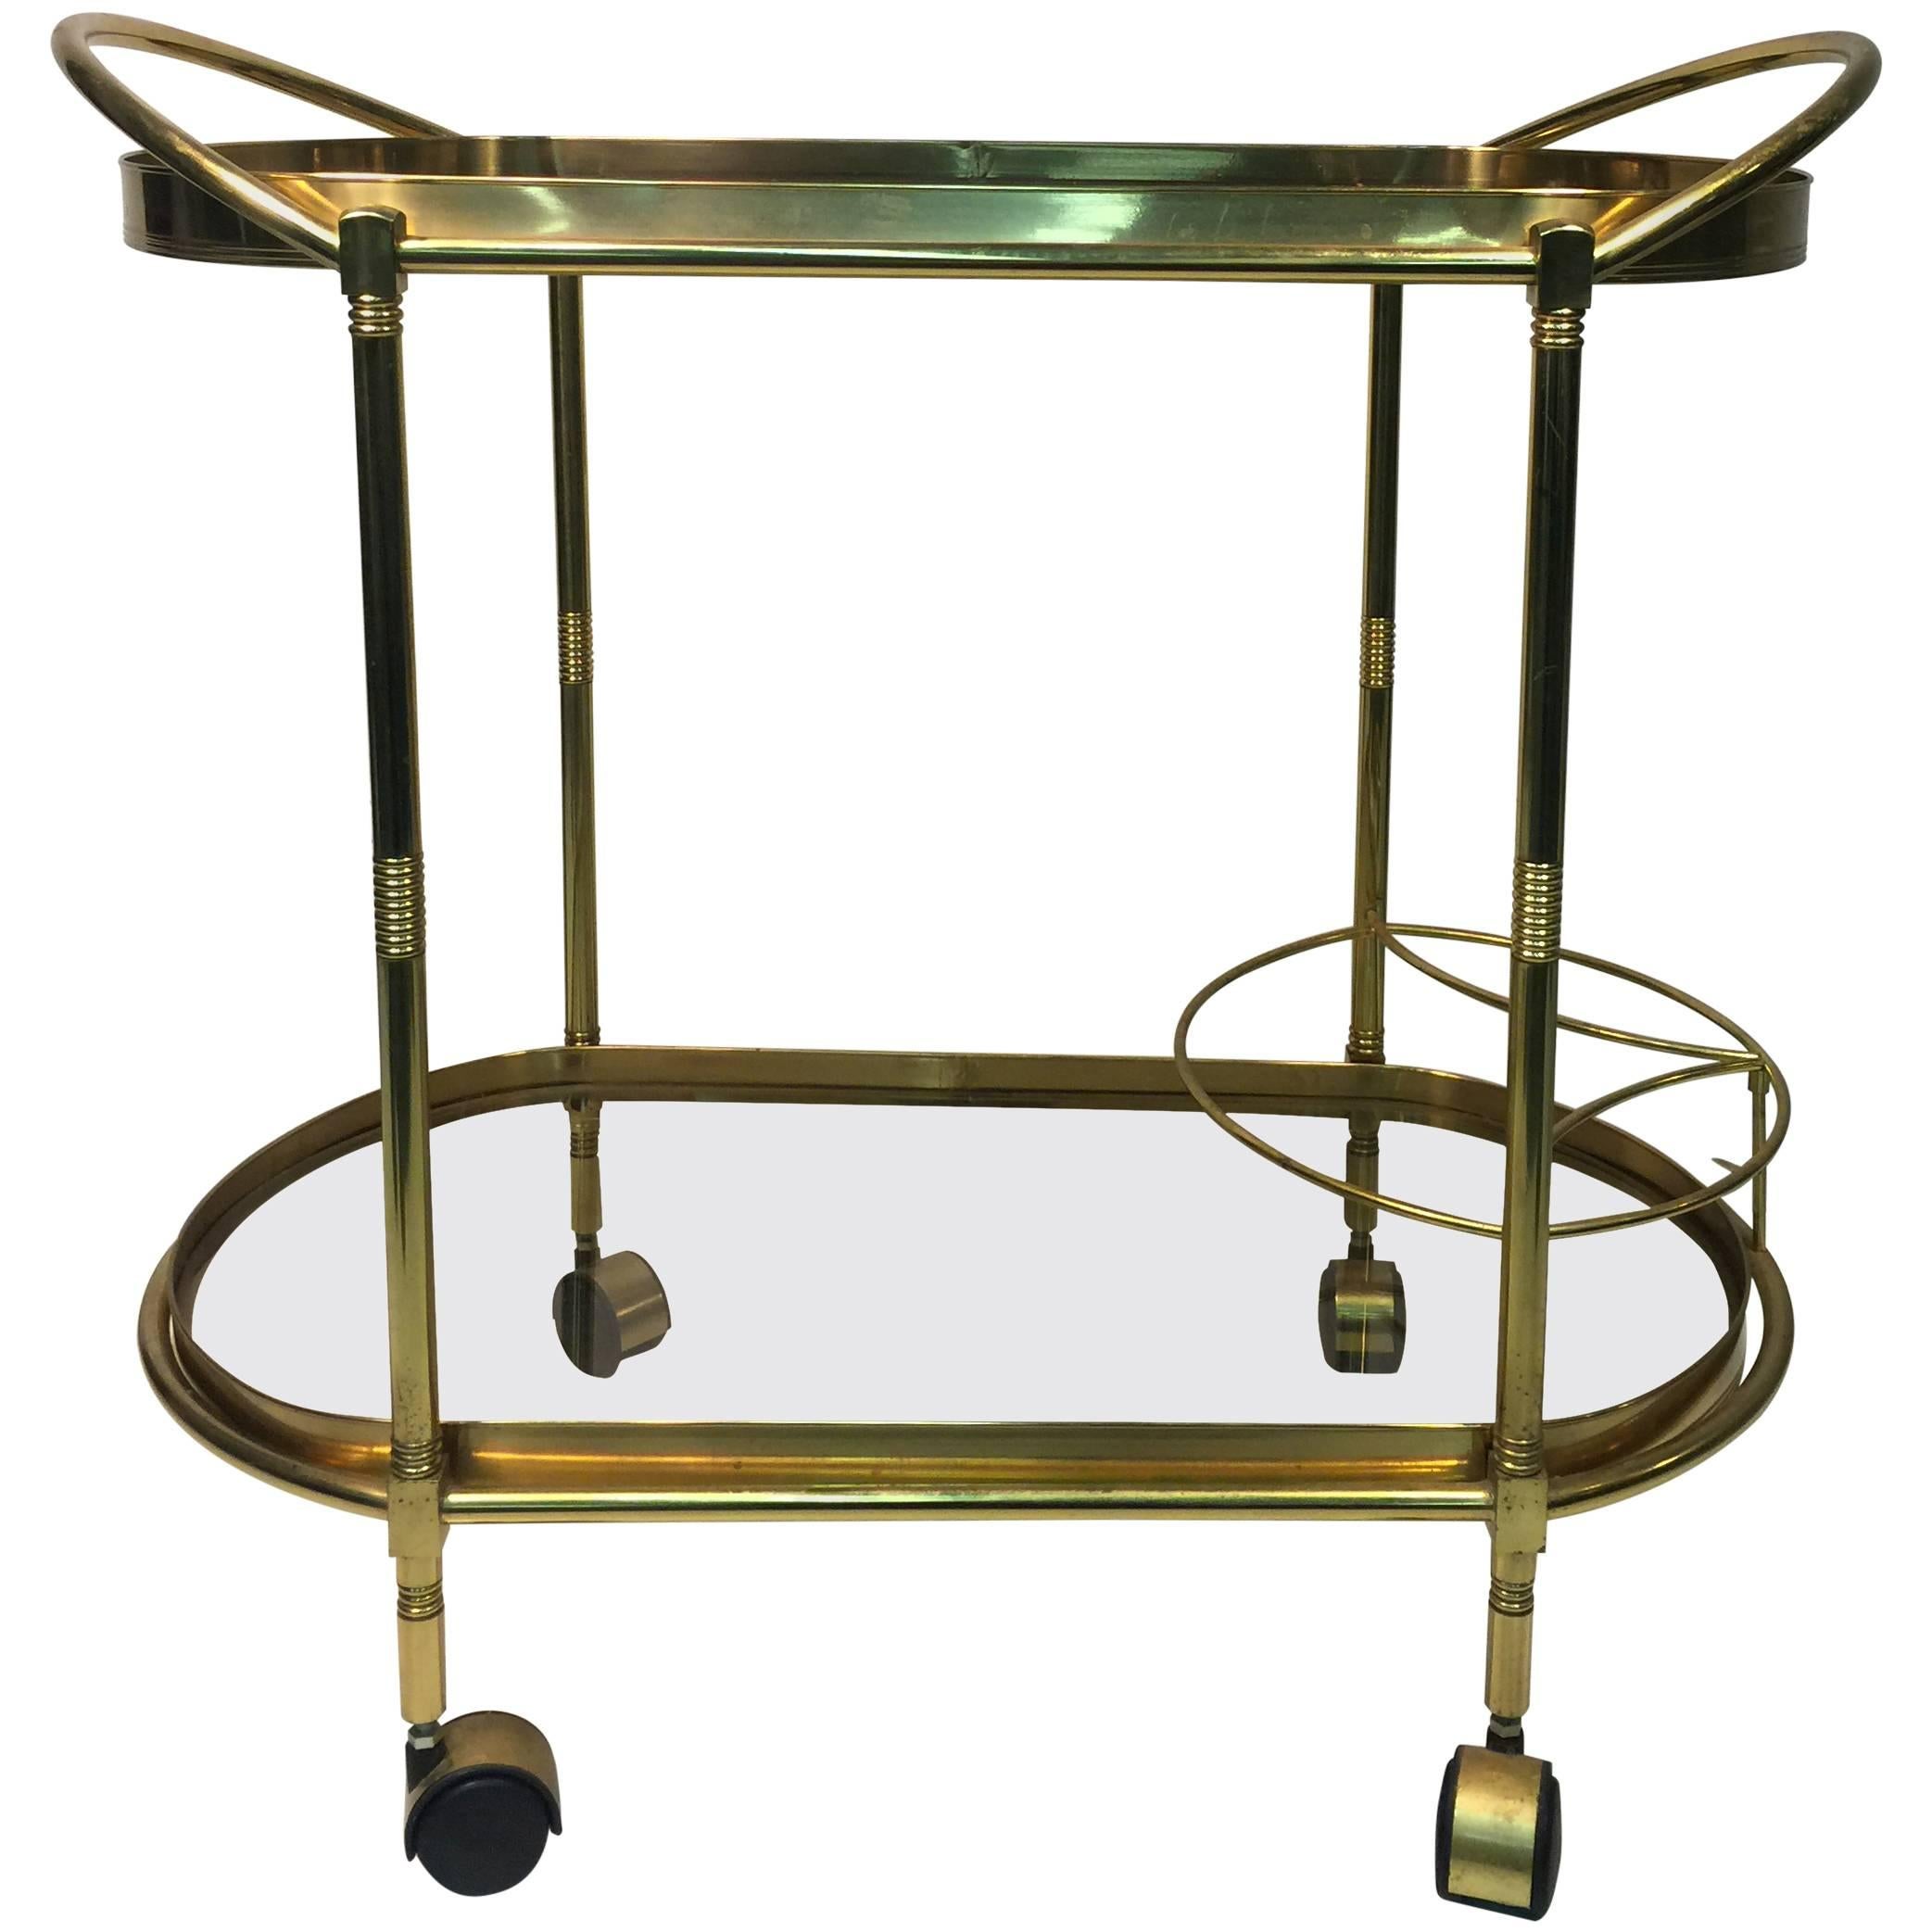 Sensational Oval Shaped Two-Tier Brass Italian Tea or Bar Cart For Sale